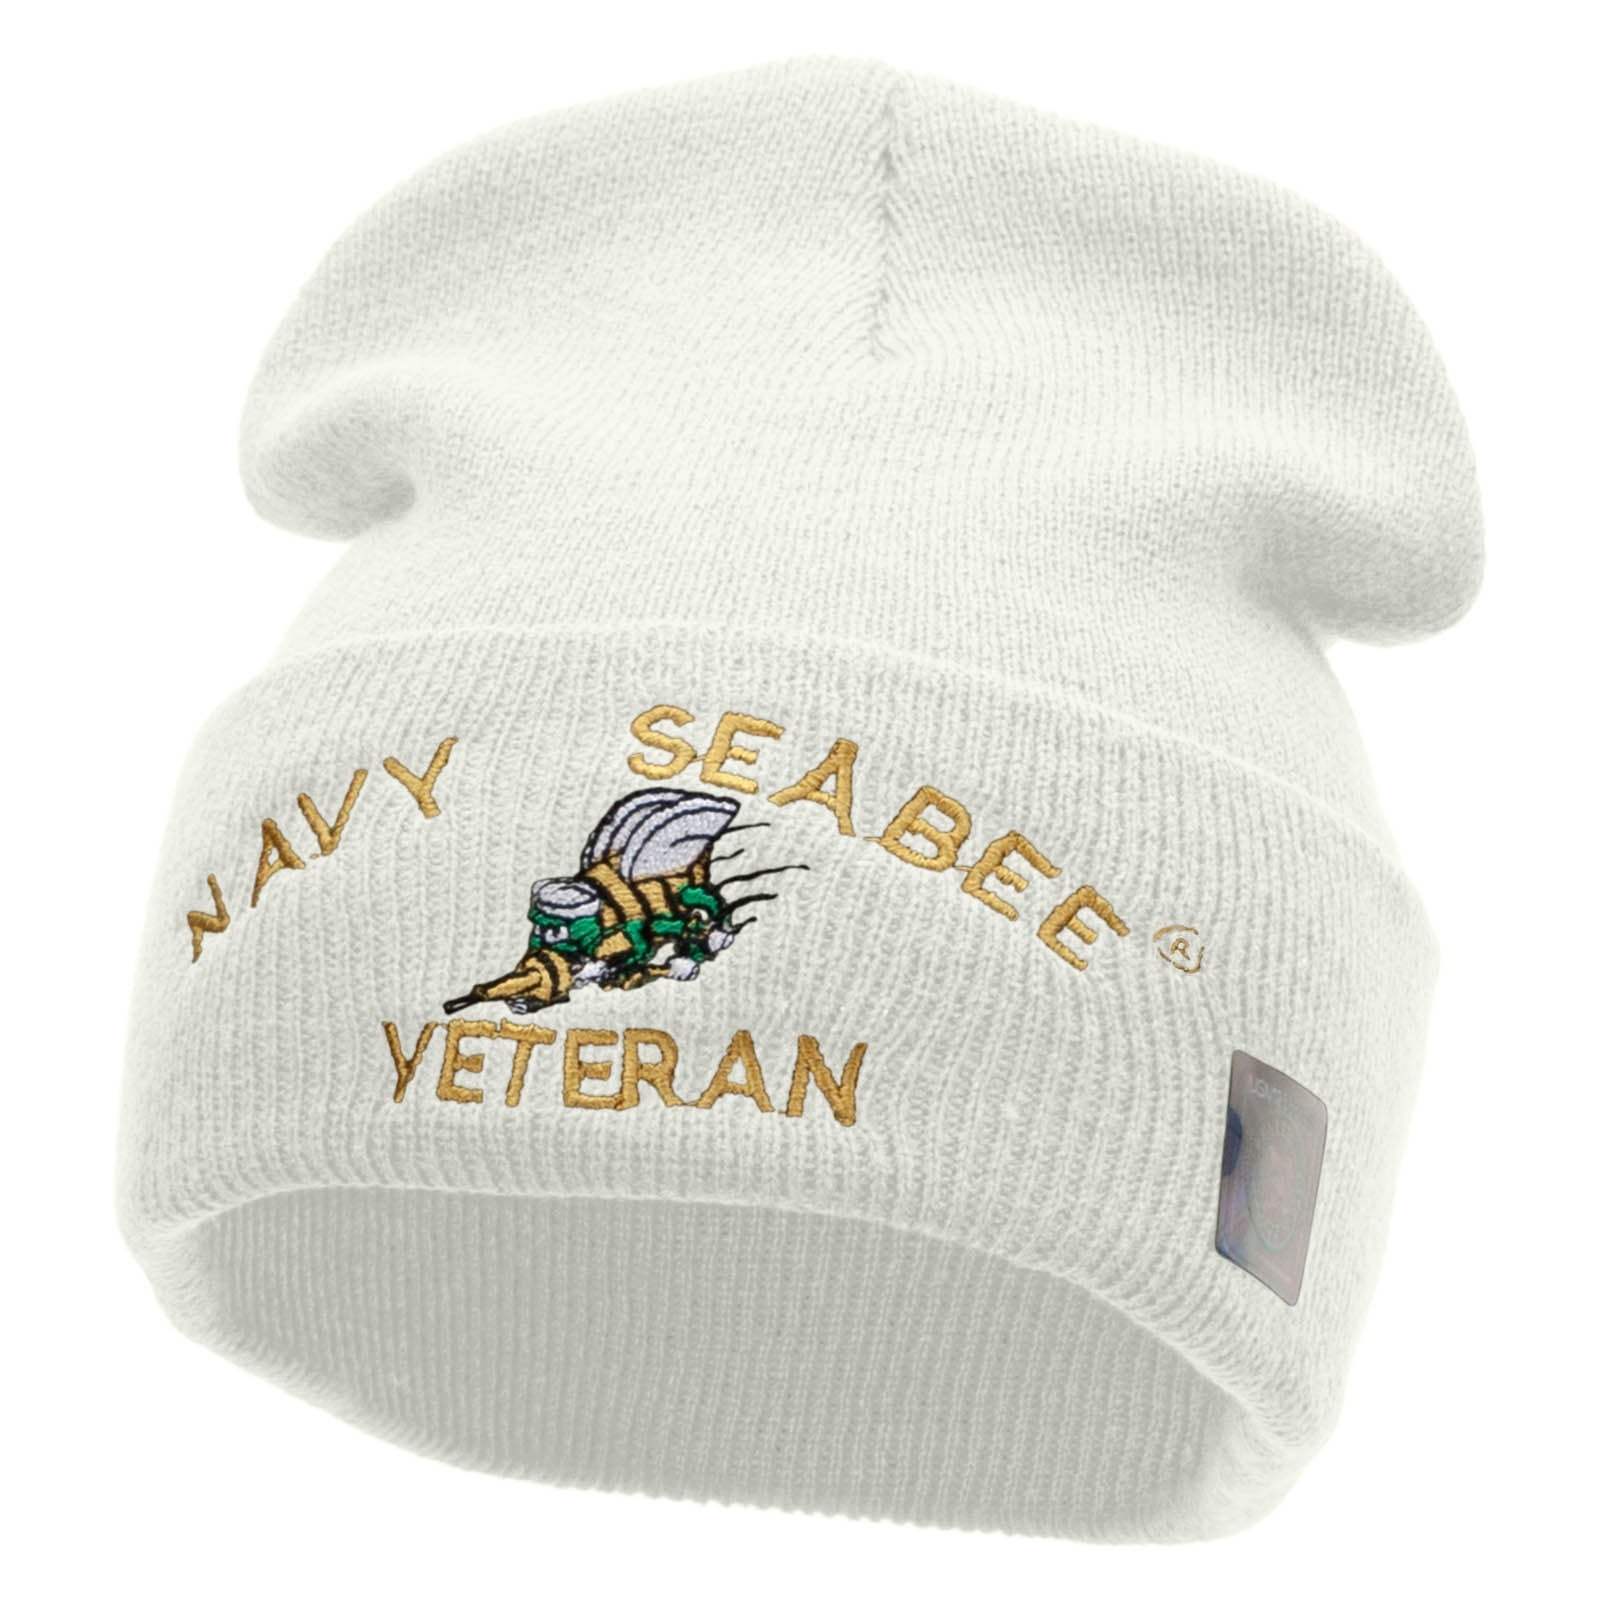 Licensed Navy Seabee Veteran Logo Embroidered Long Beanie Made in USA - White OSFM